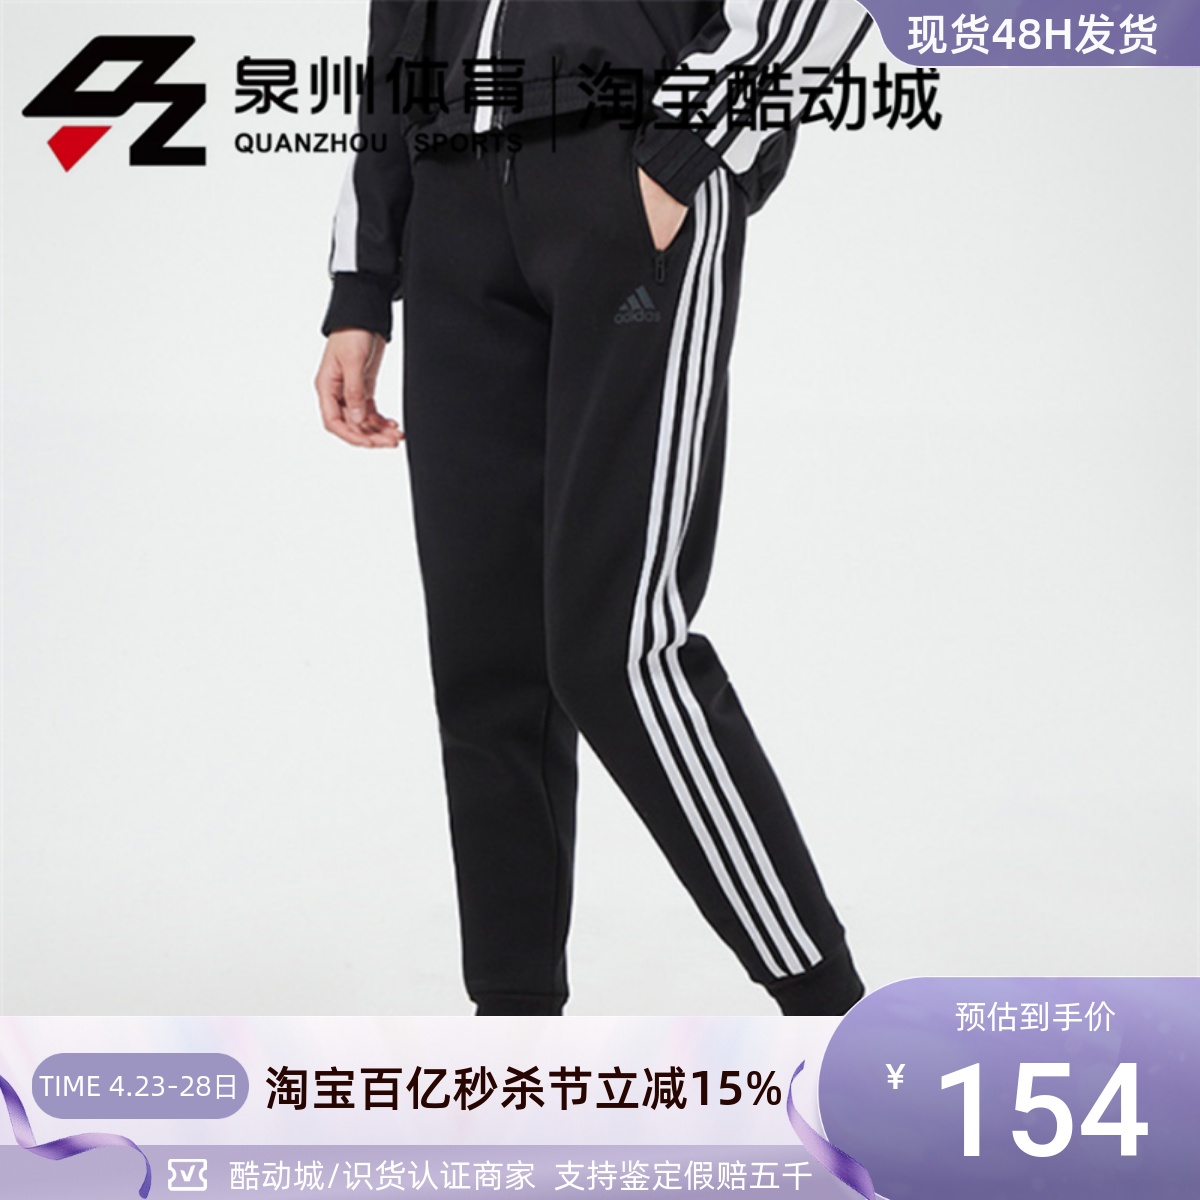 Adidas/阿迪达斯 FI PT DK 女子透气休闲训练运动束脚长裤 GT6826